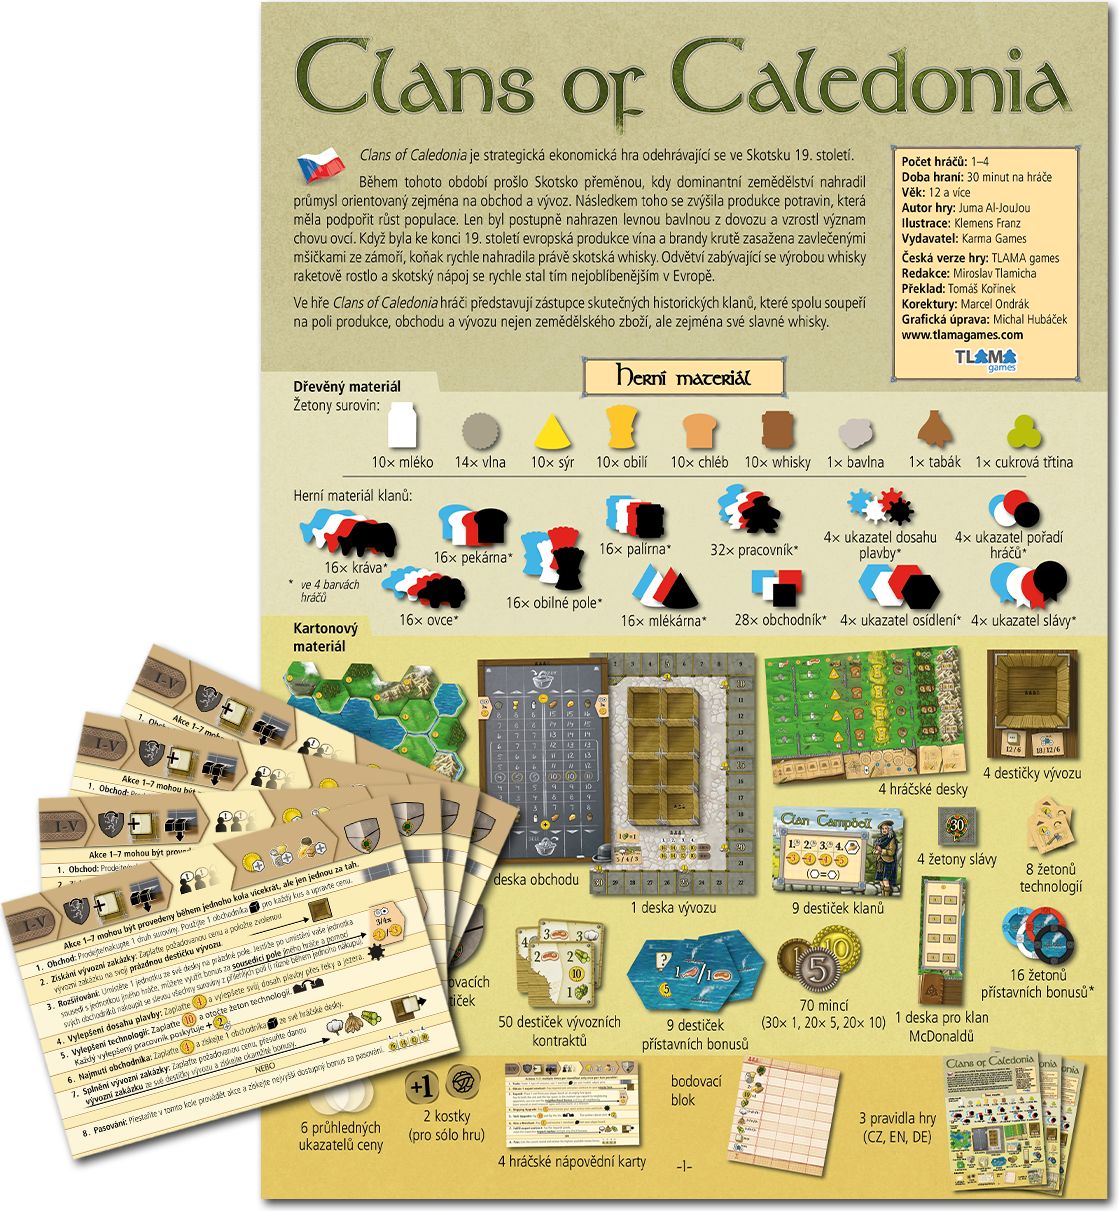 TLAMA games Čeština pro Clans of Caledonia - obrázek 1